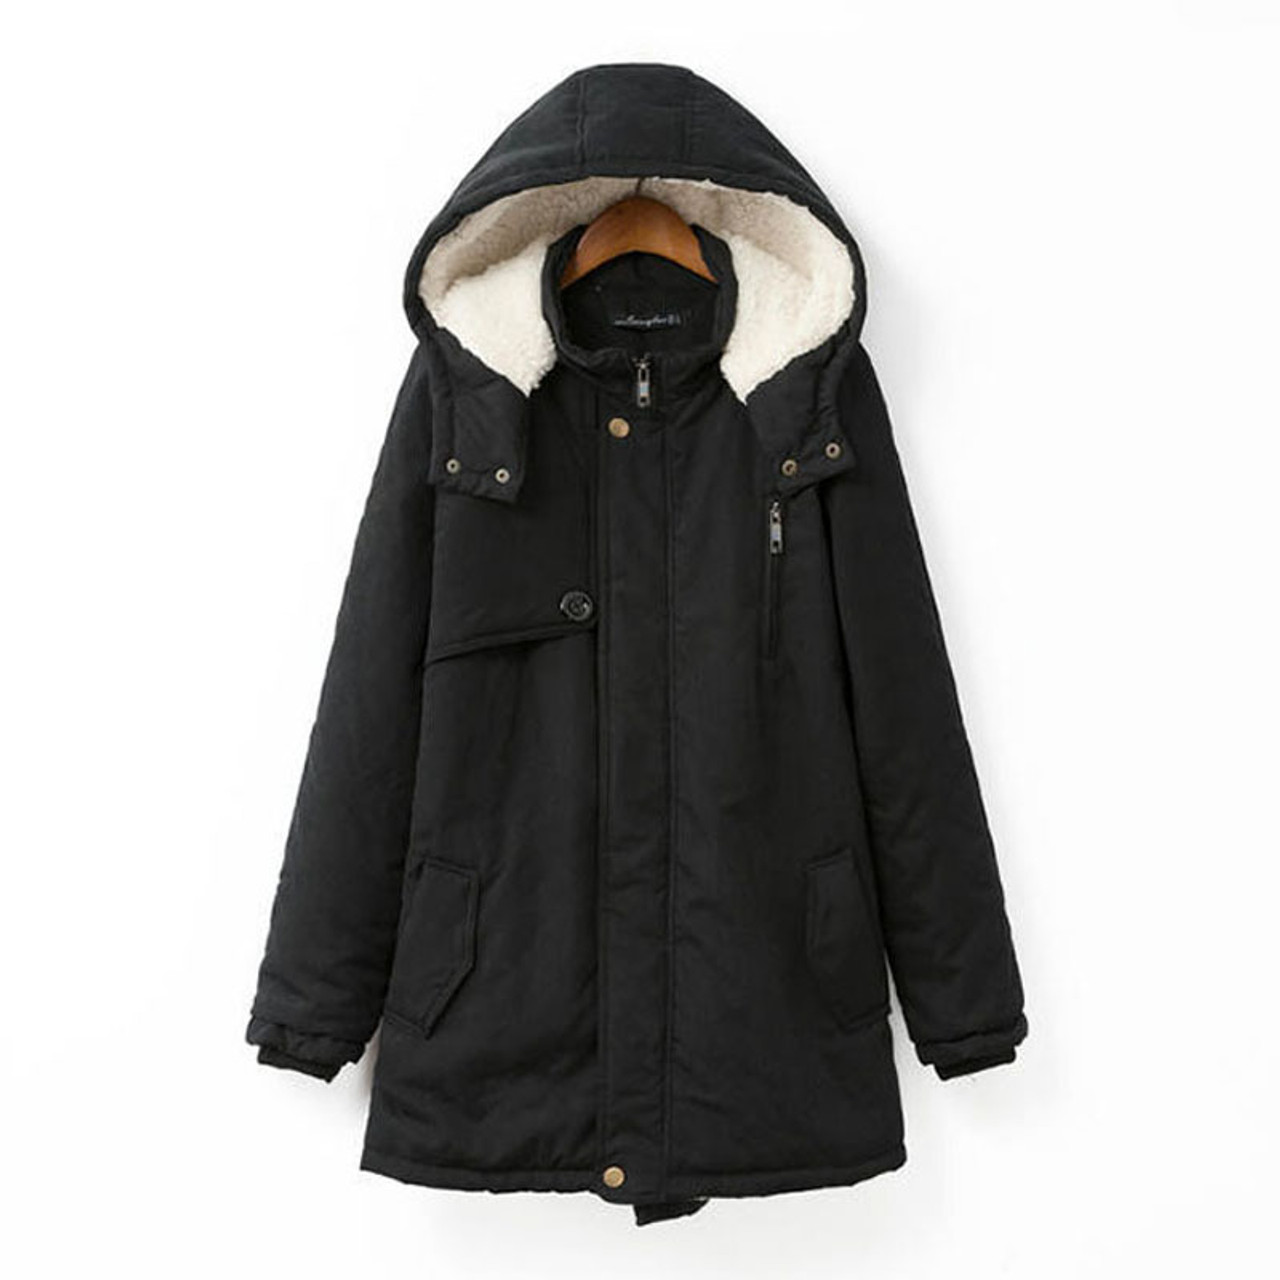 Fitaylor Cotton Parkas Lady Hooded 2018 Winter Black Jacket Women Plus Size Loose Female Parka Coat Jacket - OnshopDeals.Com